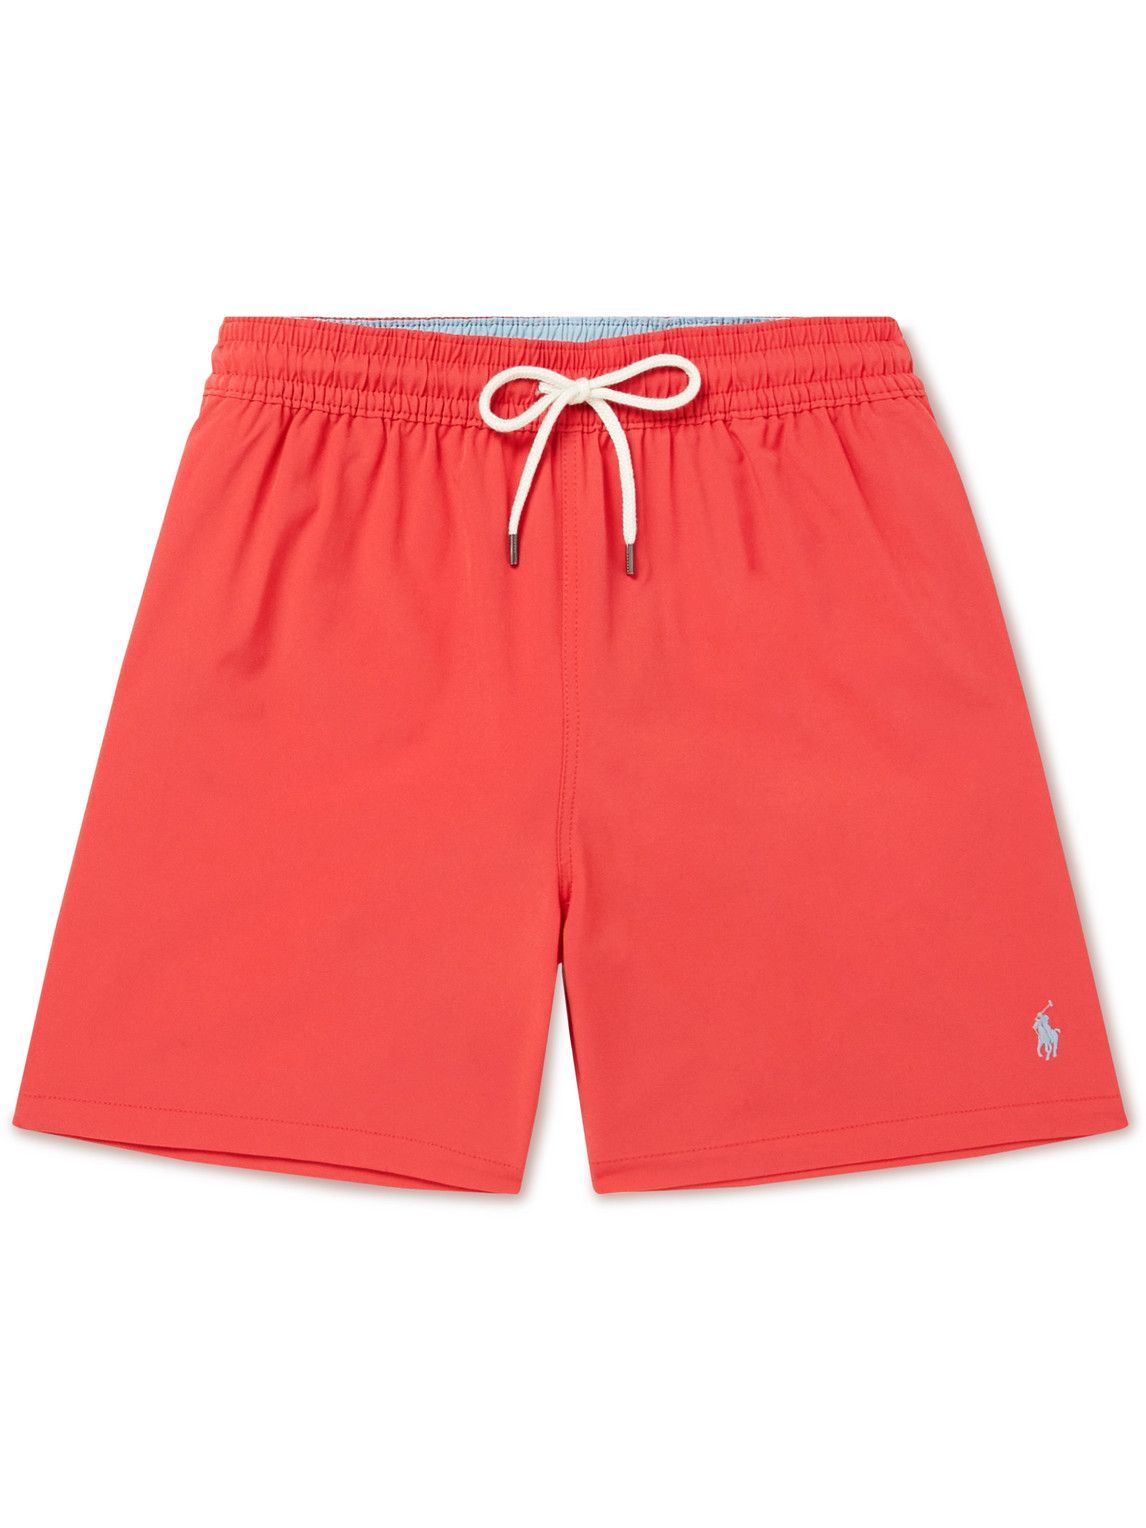 Polo Ralph Lauren - Traveler Mid-Length Recycled Swim Shorts - Red